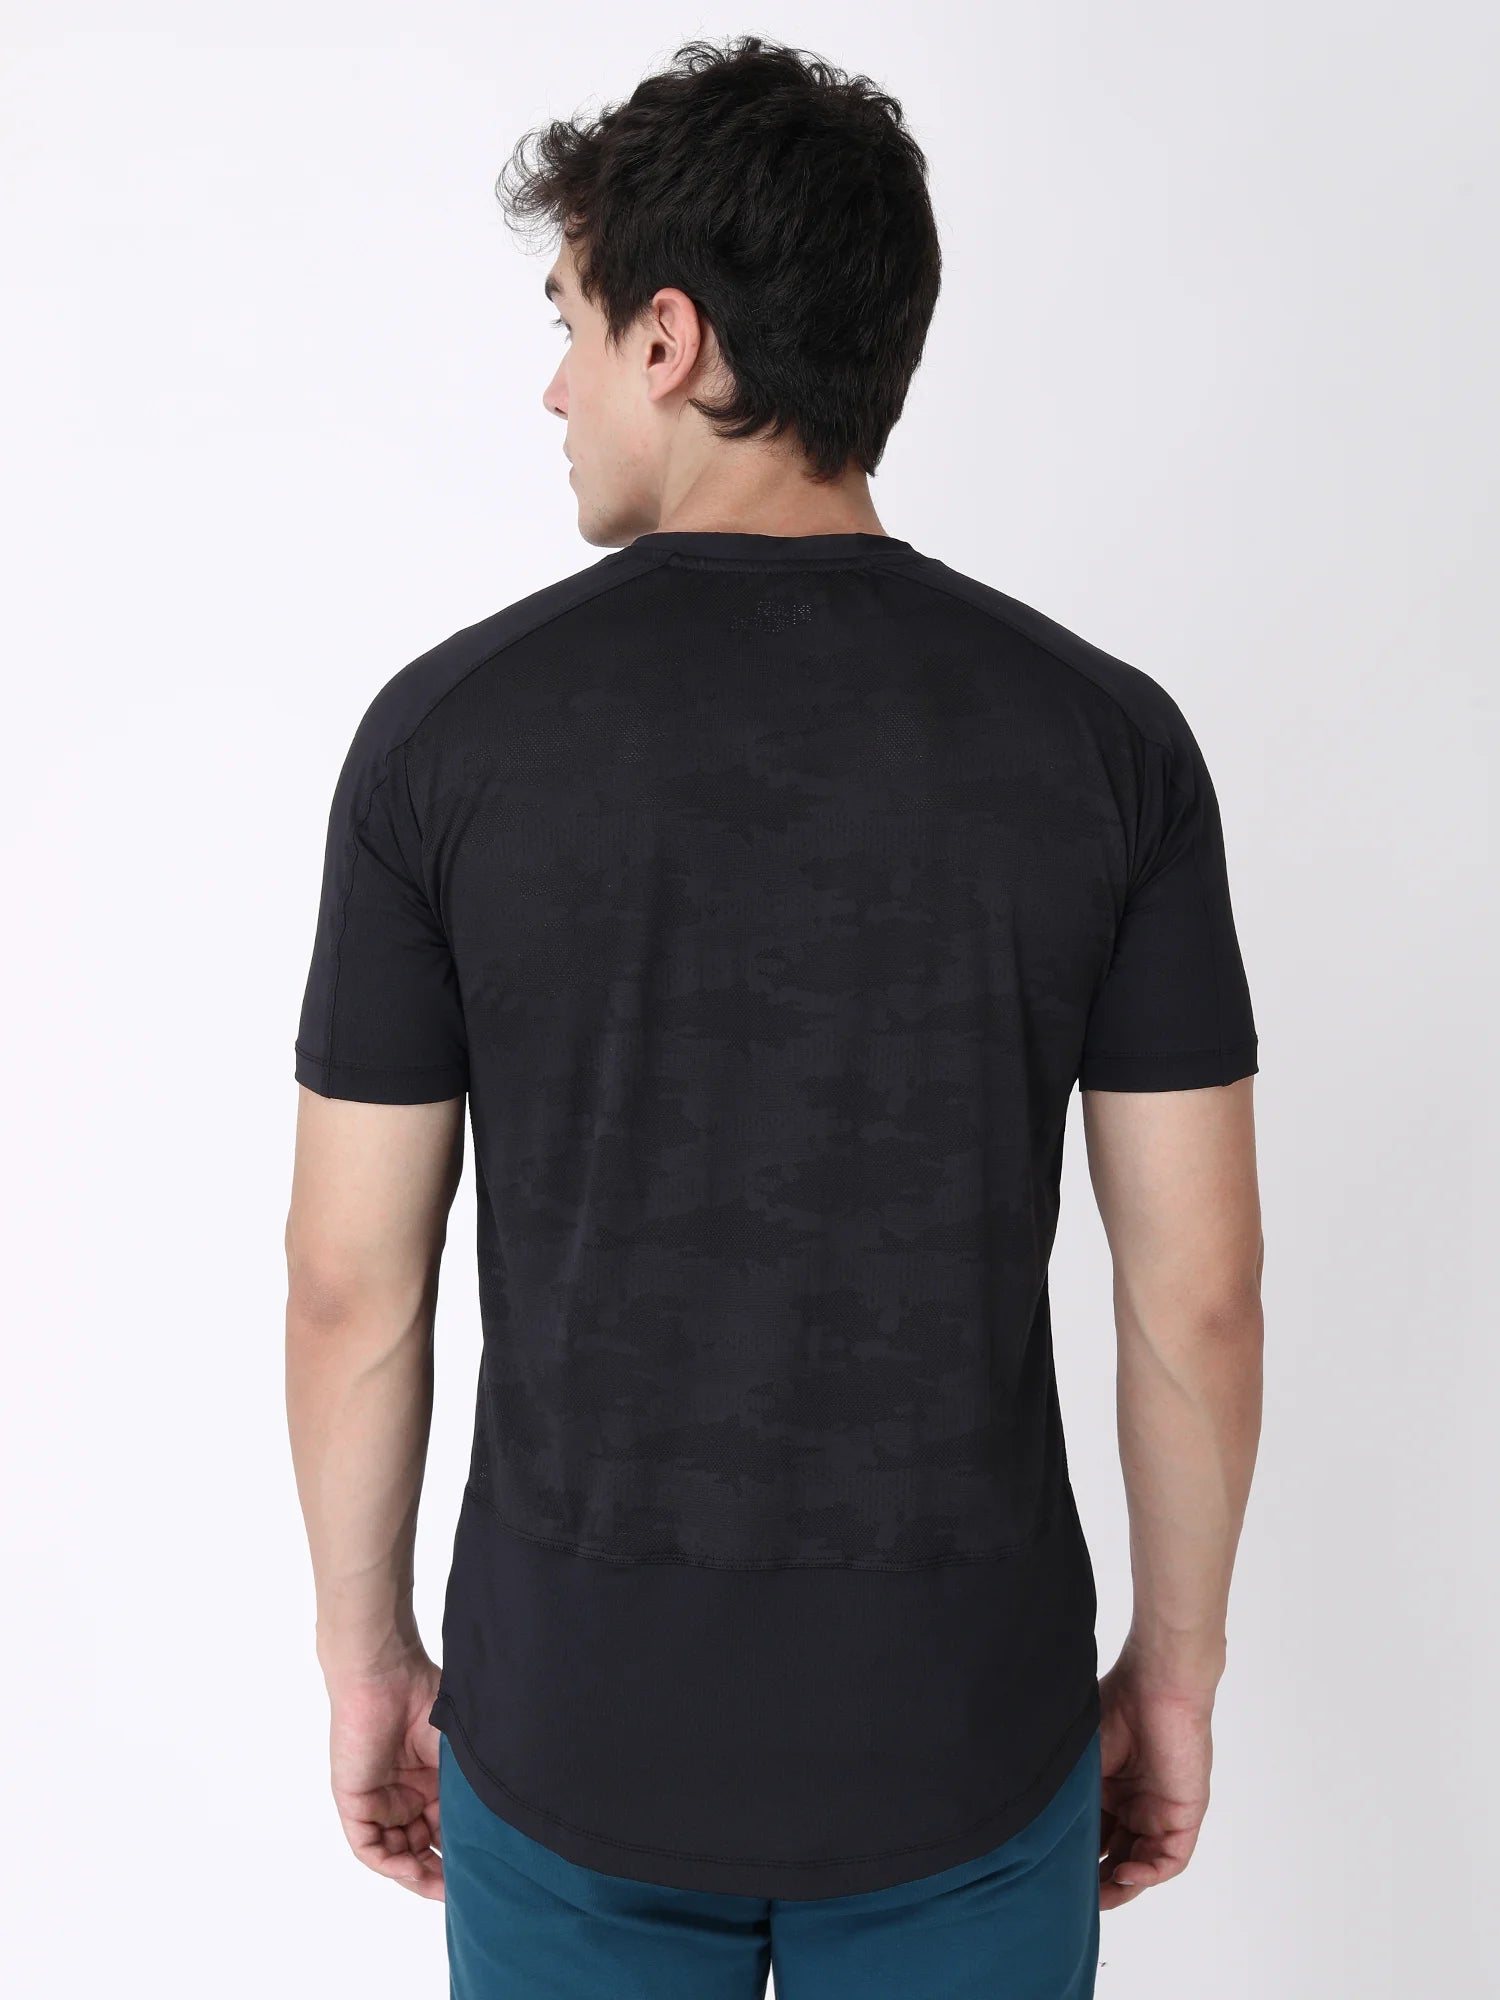 Jeffa Camouflage Jacquard T-shirt in Black